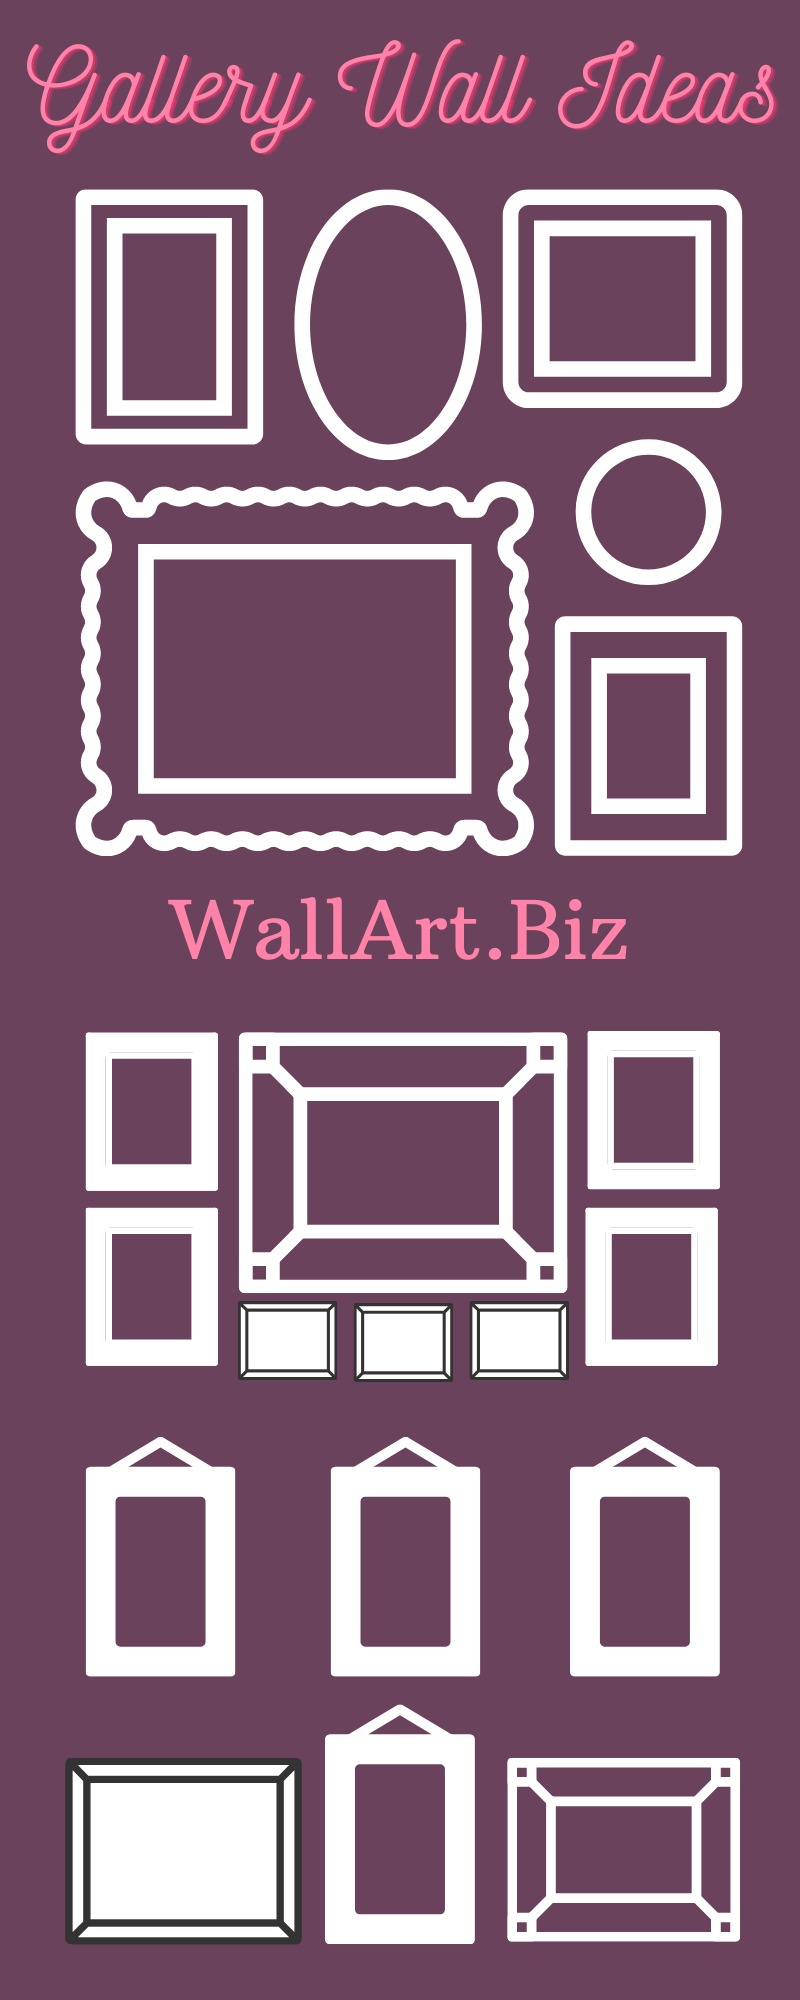 Gallery wall layout Ideas